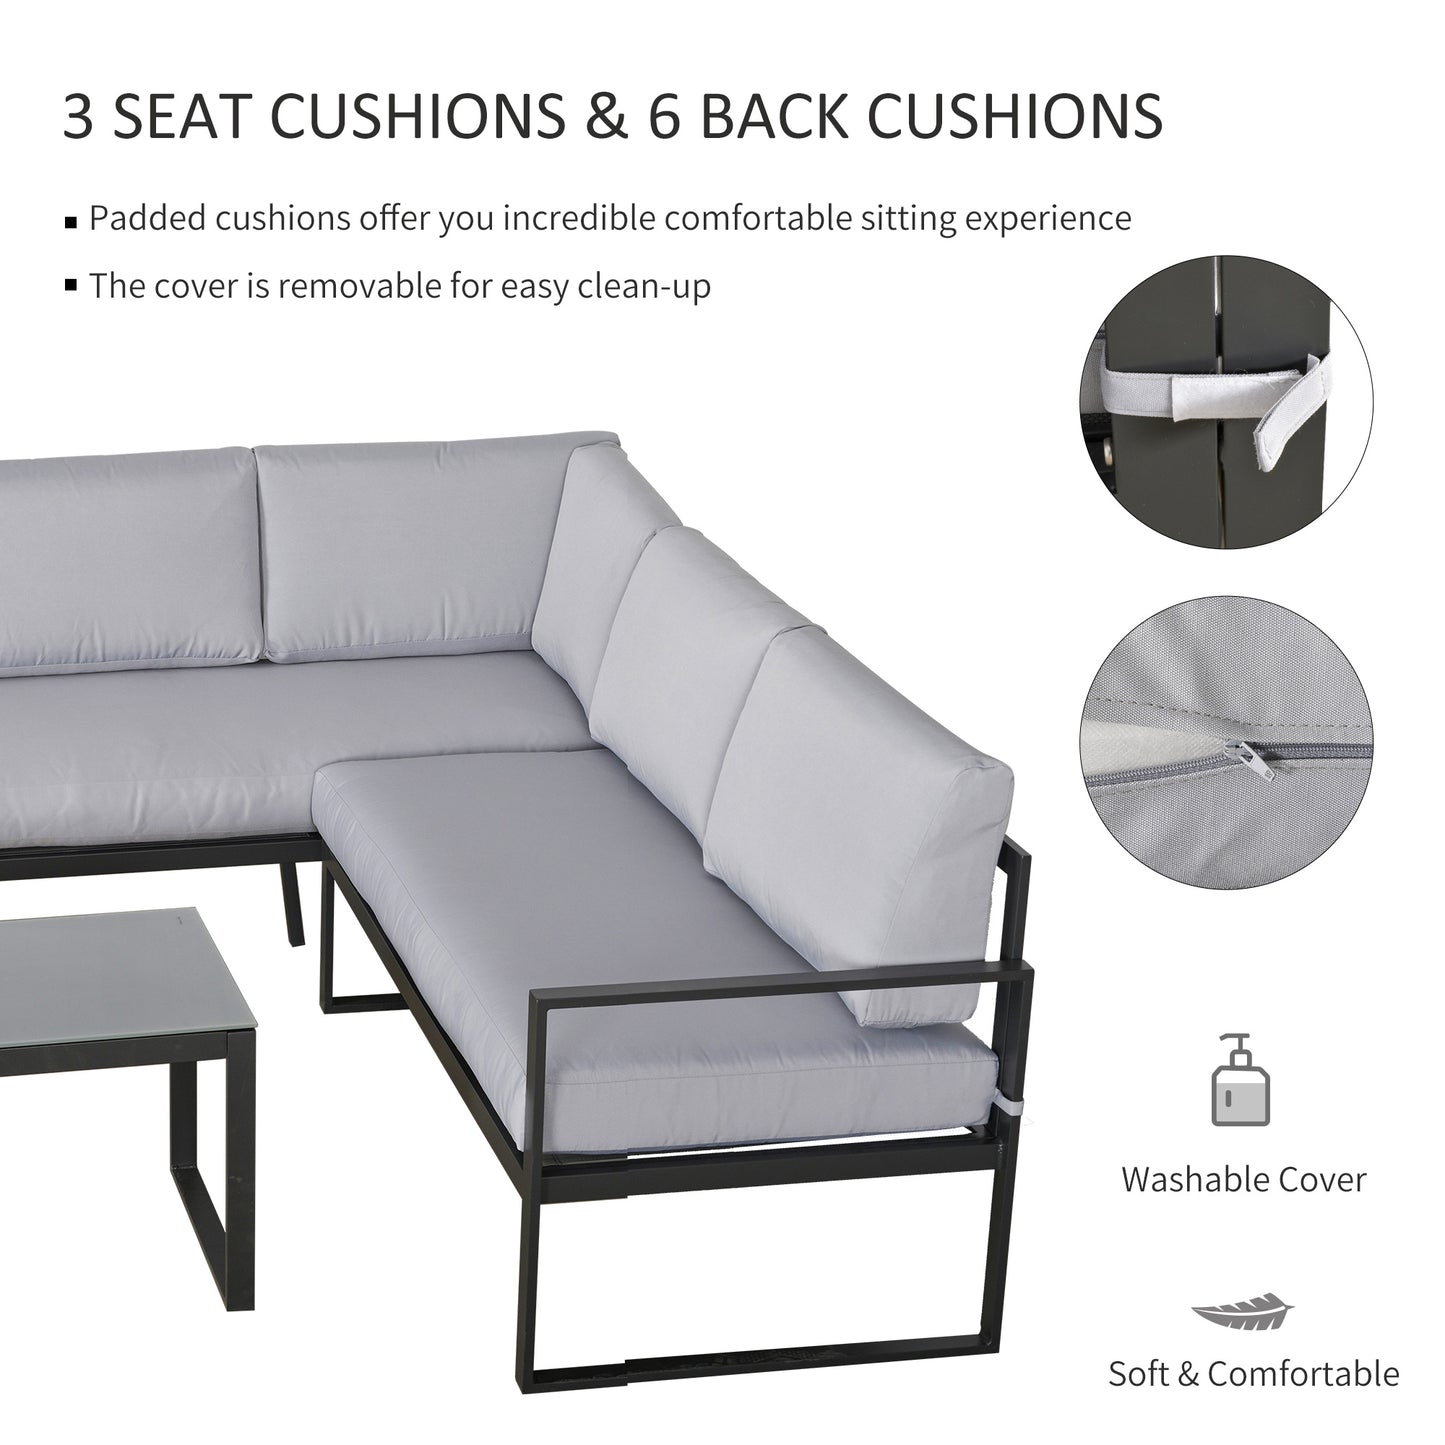 Outsunny 3 Pieces Garden Furniture Set Conversation Set w/ Loveseat 3 Seater Sofa Table